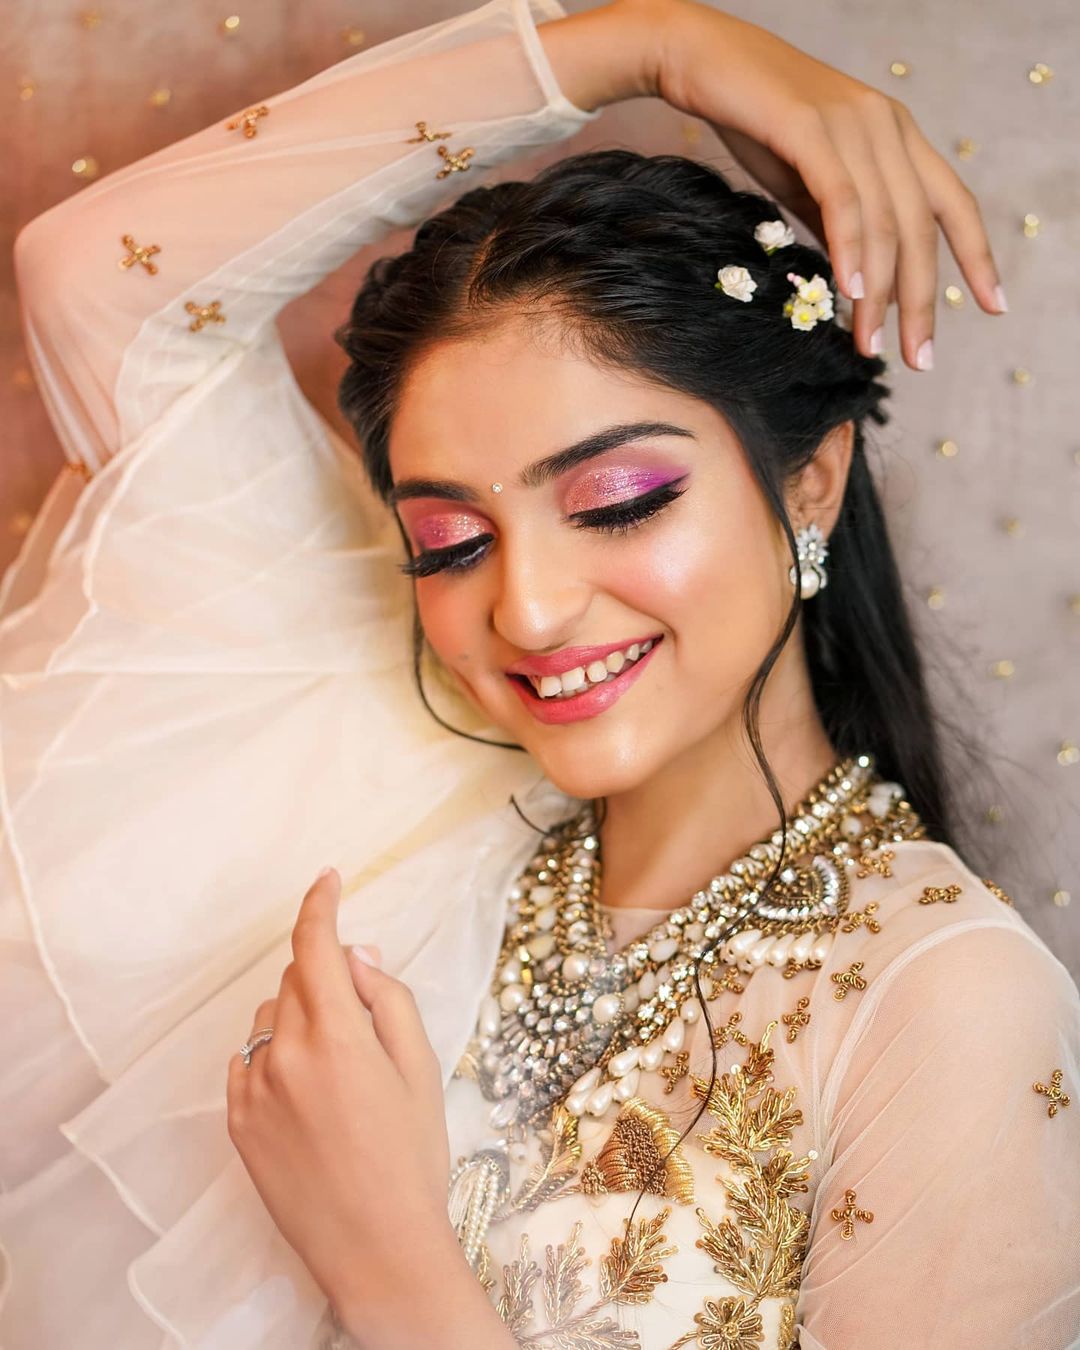 Beautiful Bridal Braids - Latest Indian Bridal Wedding Hairstyles Trends  (6) - StylesGap.com